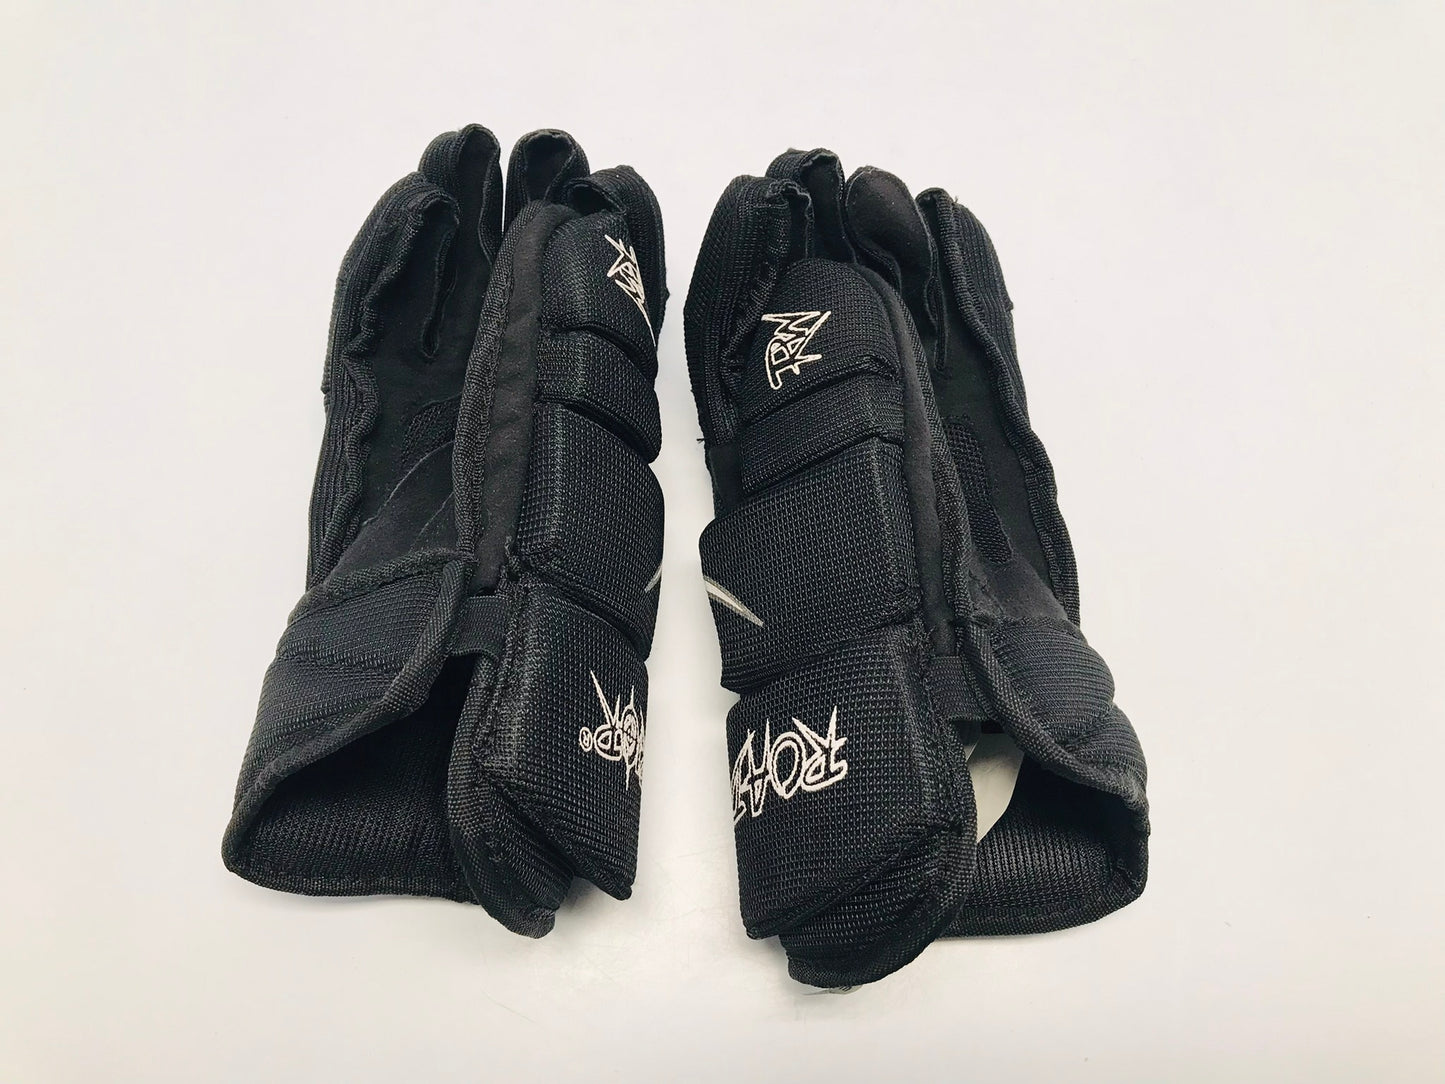 Hockey Gloves Men's Size Medium 13-14 inch Road Warrior Ball Street Hockey Gloves New